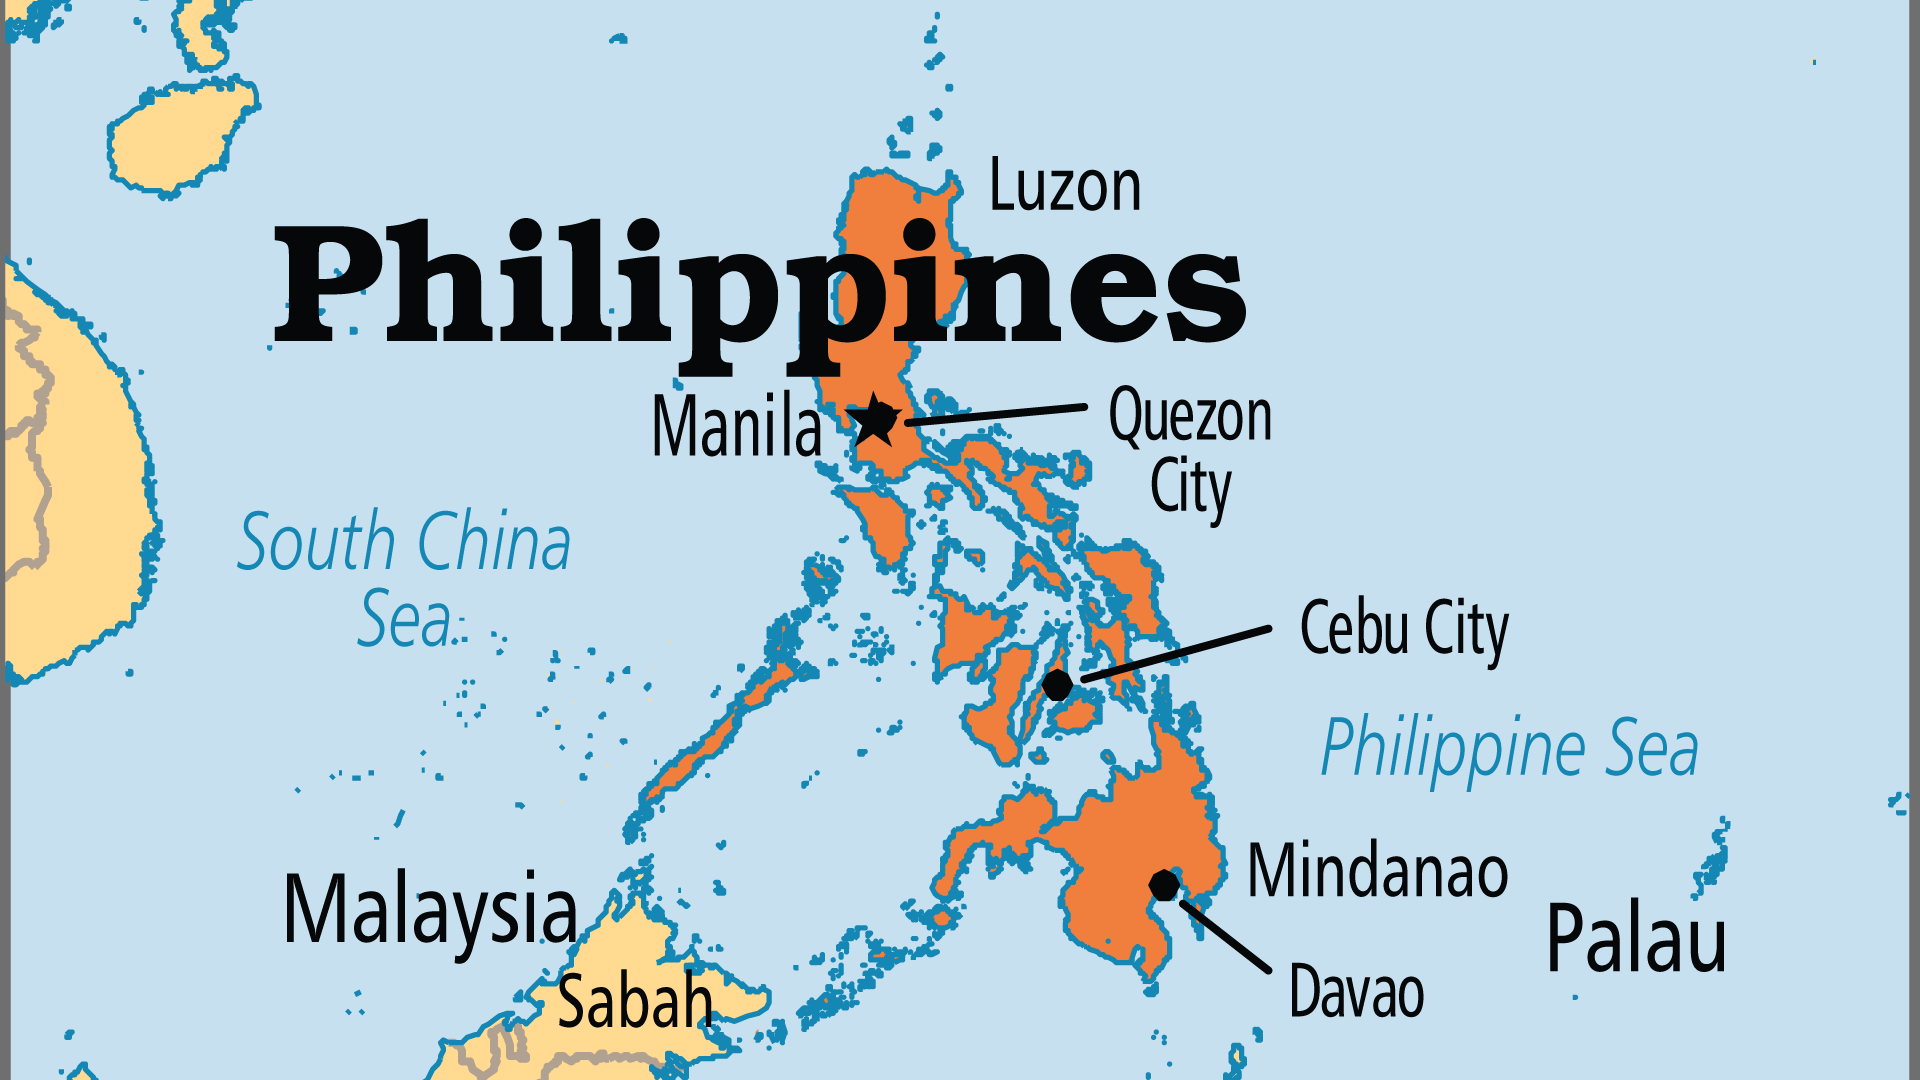 Philippines (Operation World)